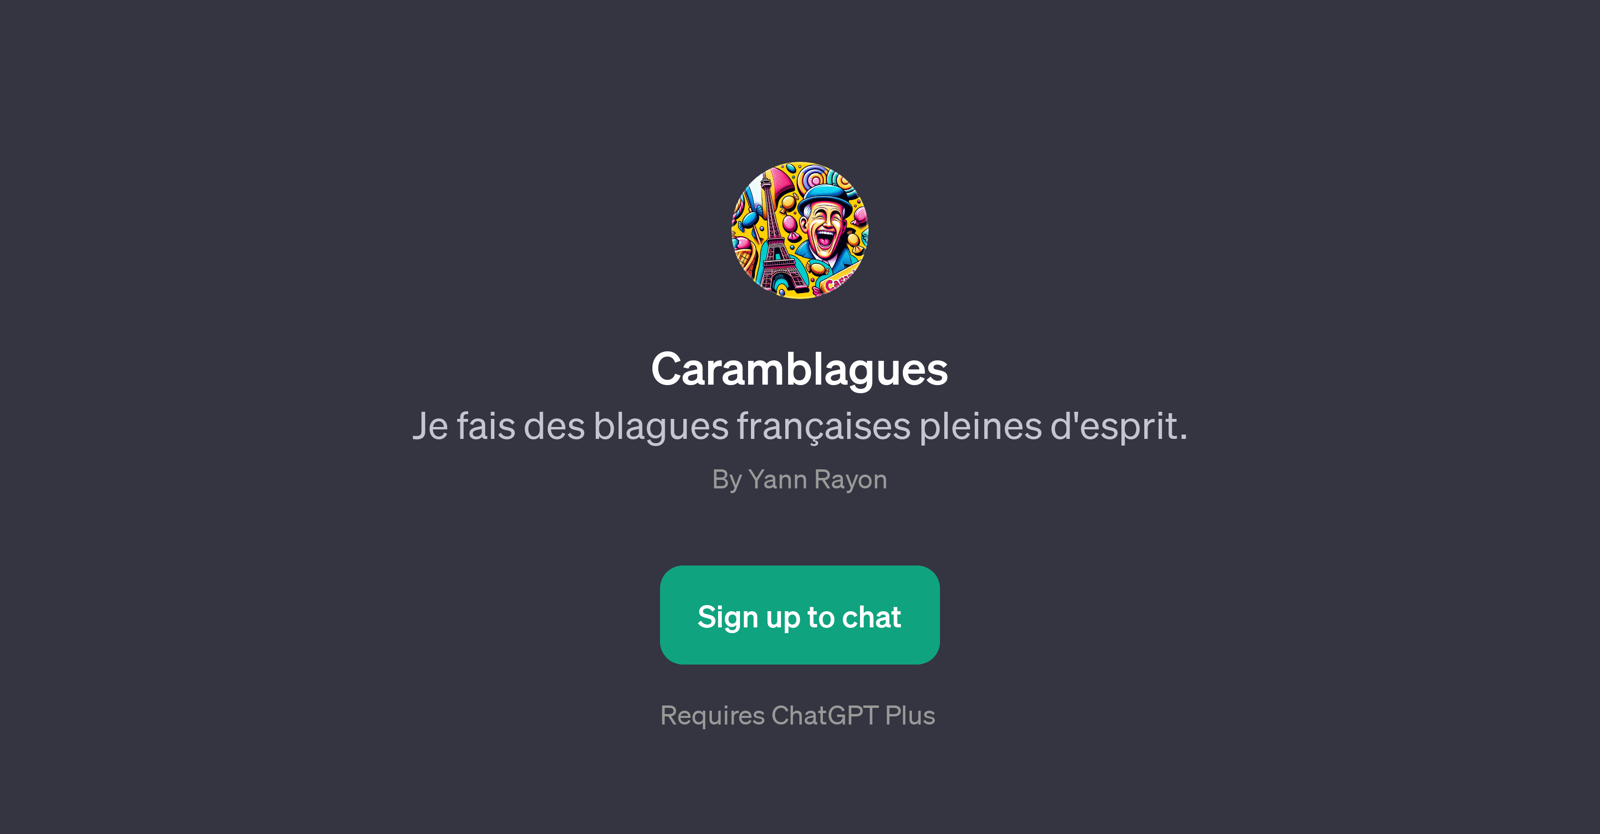 Caramblagues website